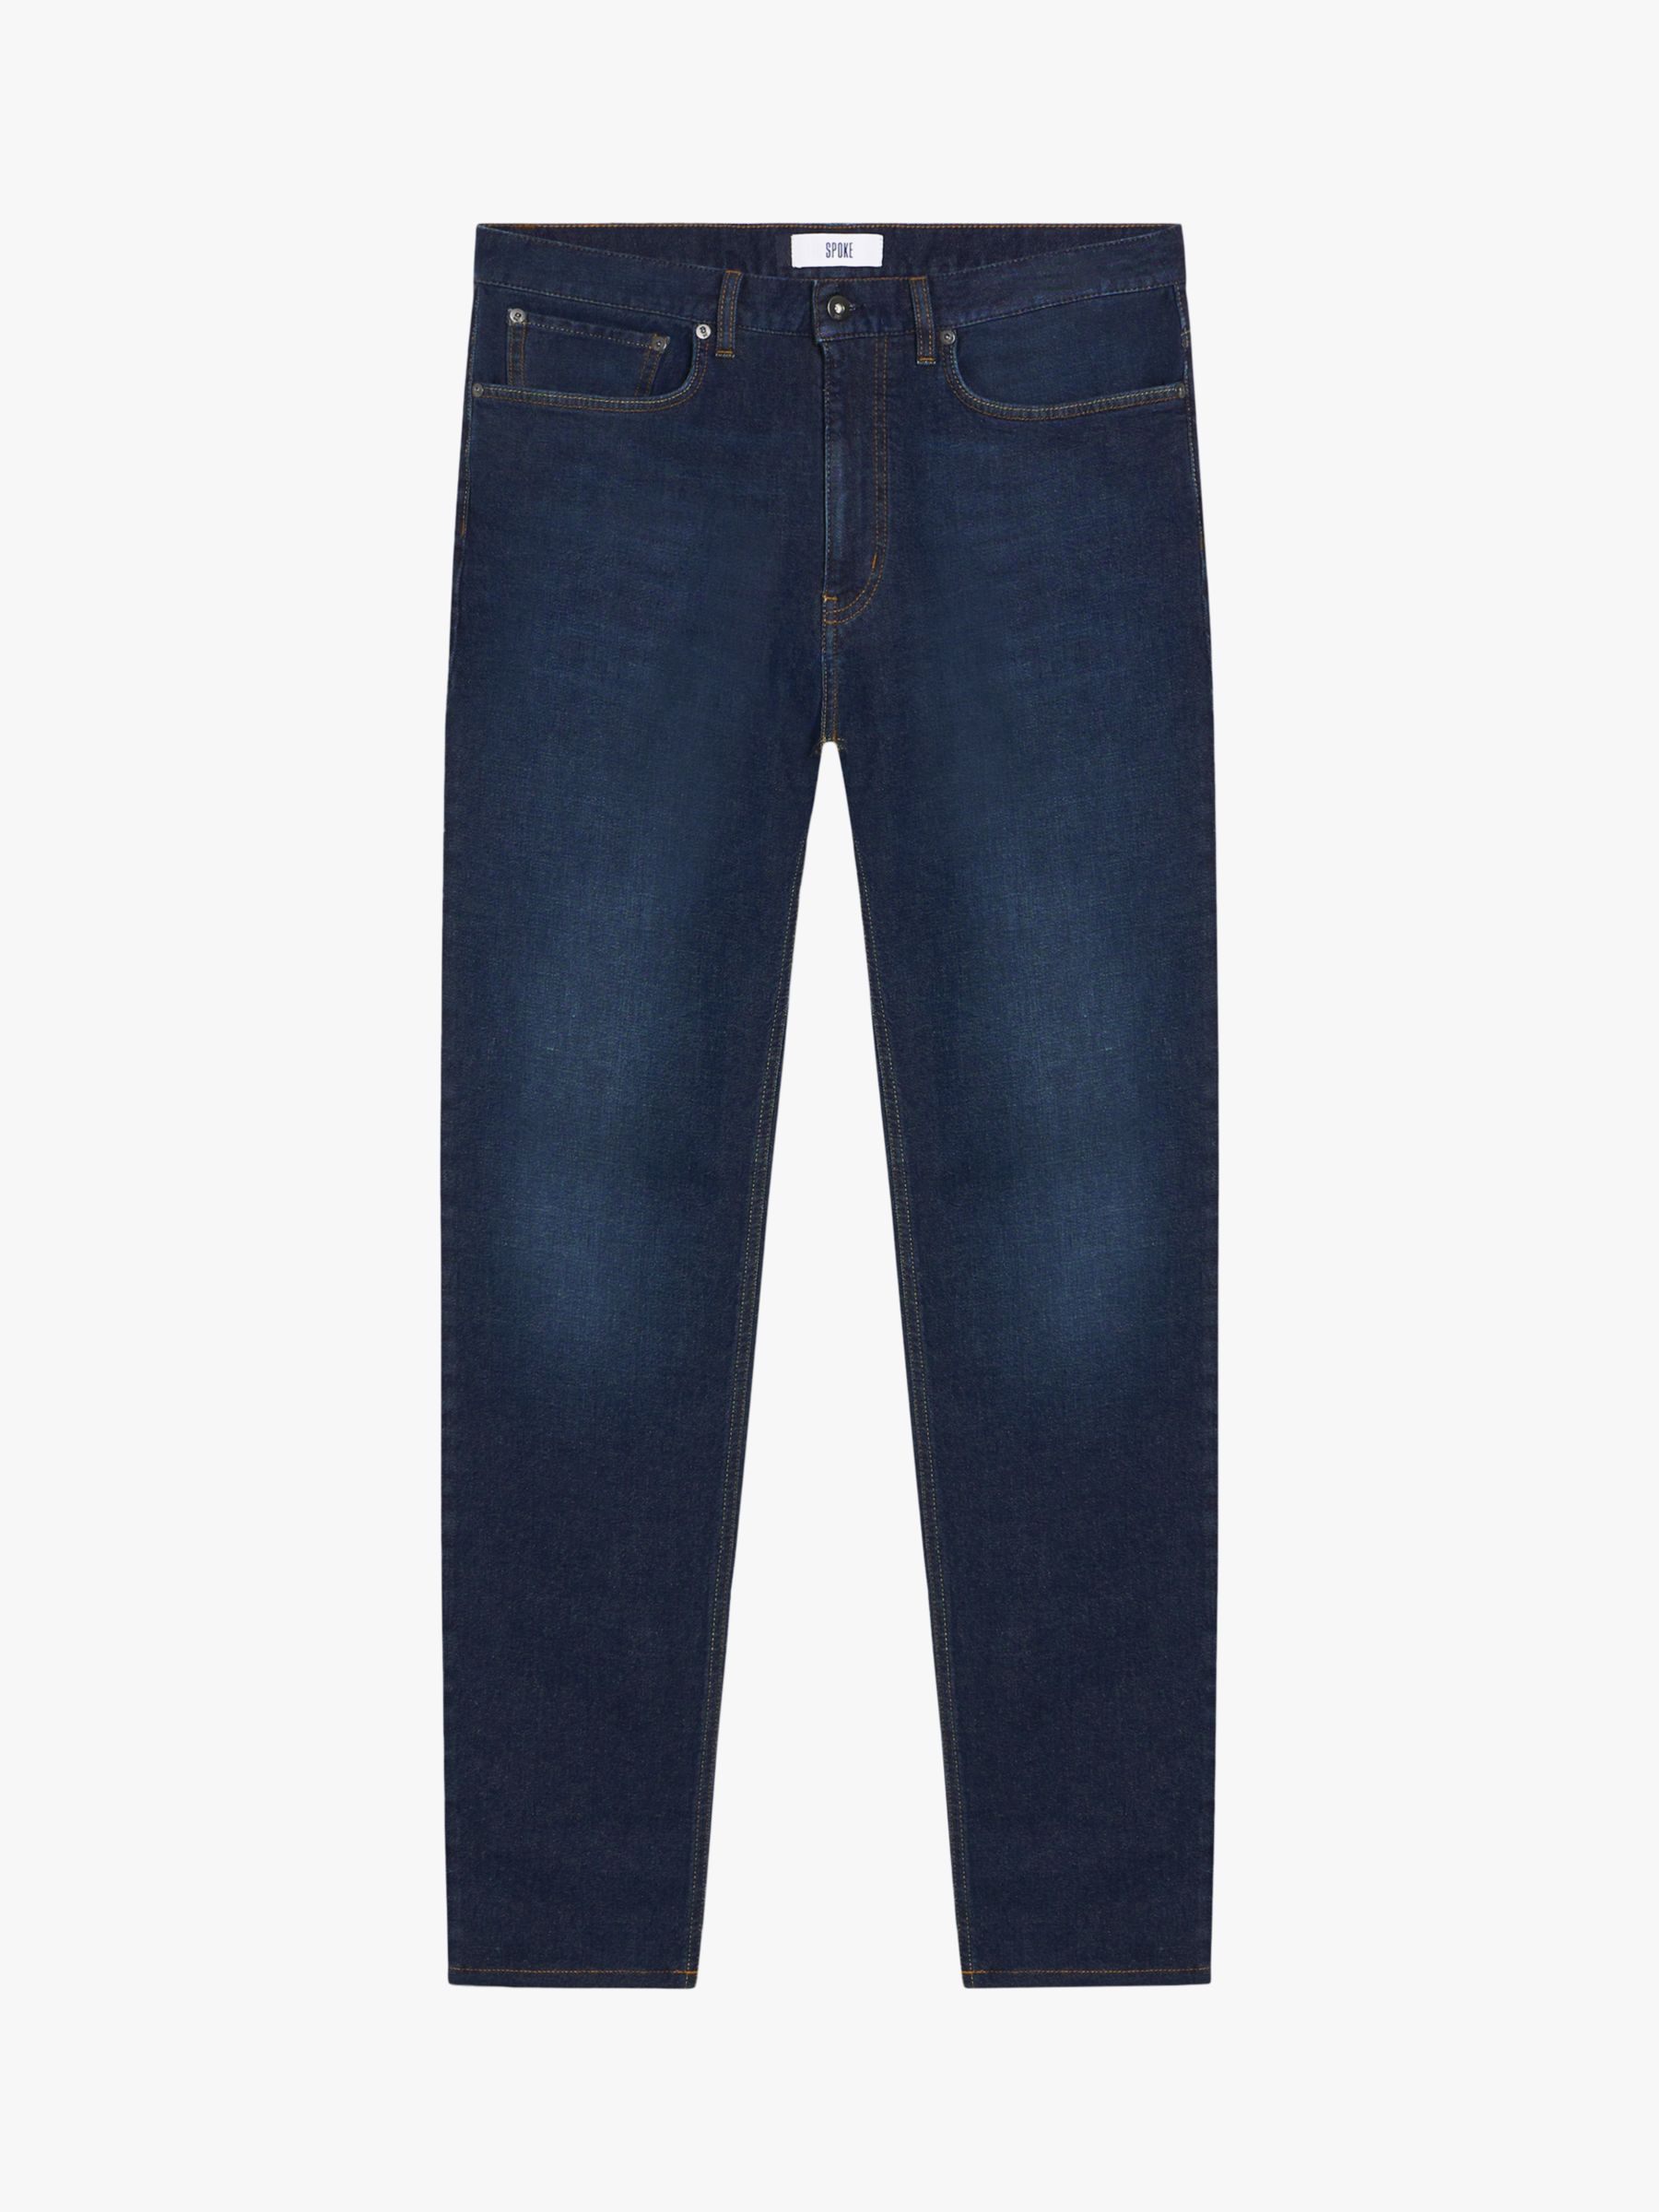 Buy SPOKE 12oz Denim Narrow Thigh Jeans Online at johnlewis.com